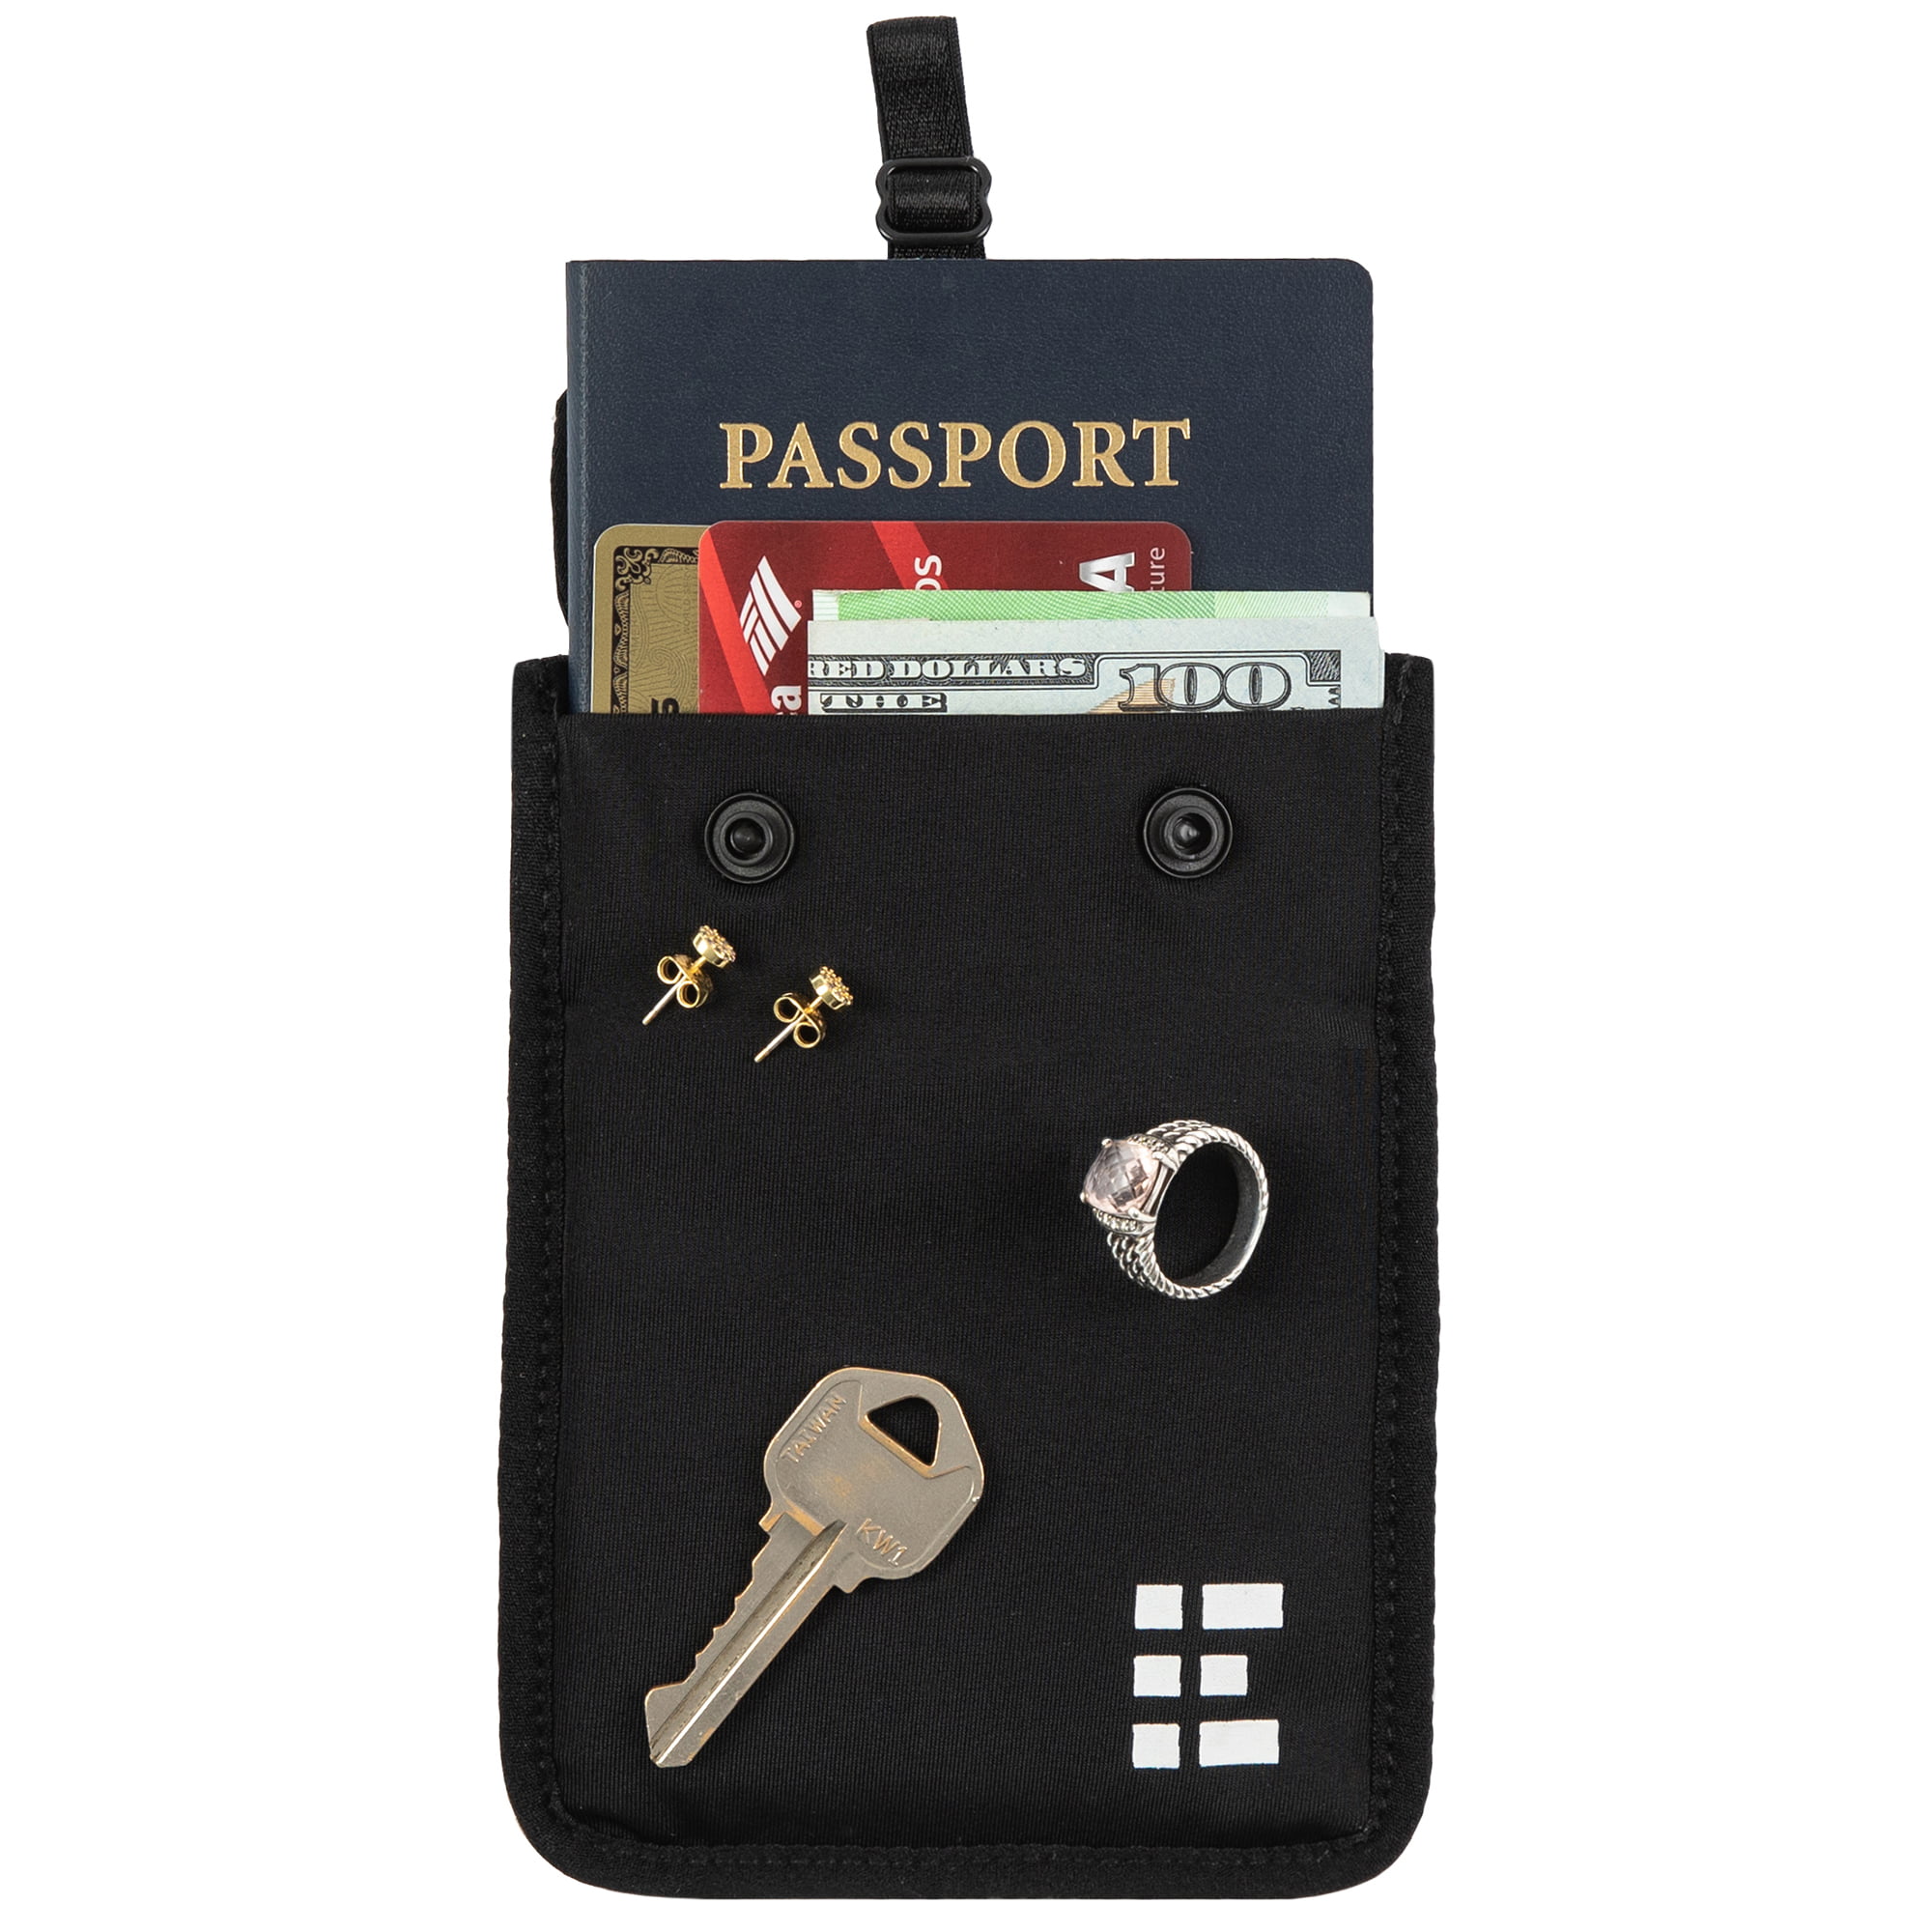 Hidden Bra Wallet - Travel Pouch & Secret Pocket for Passport